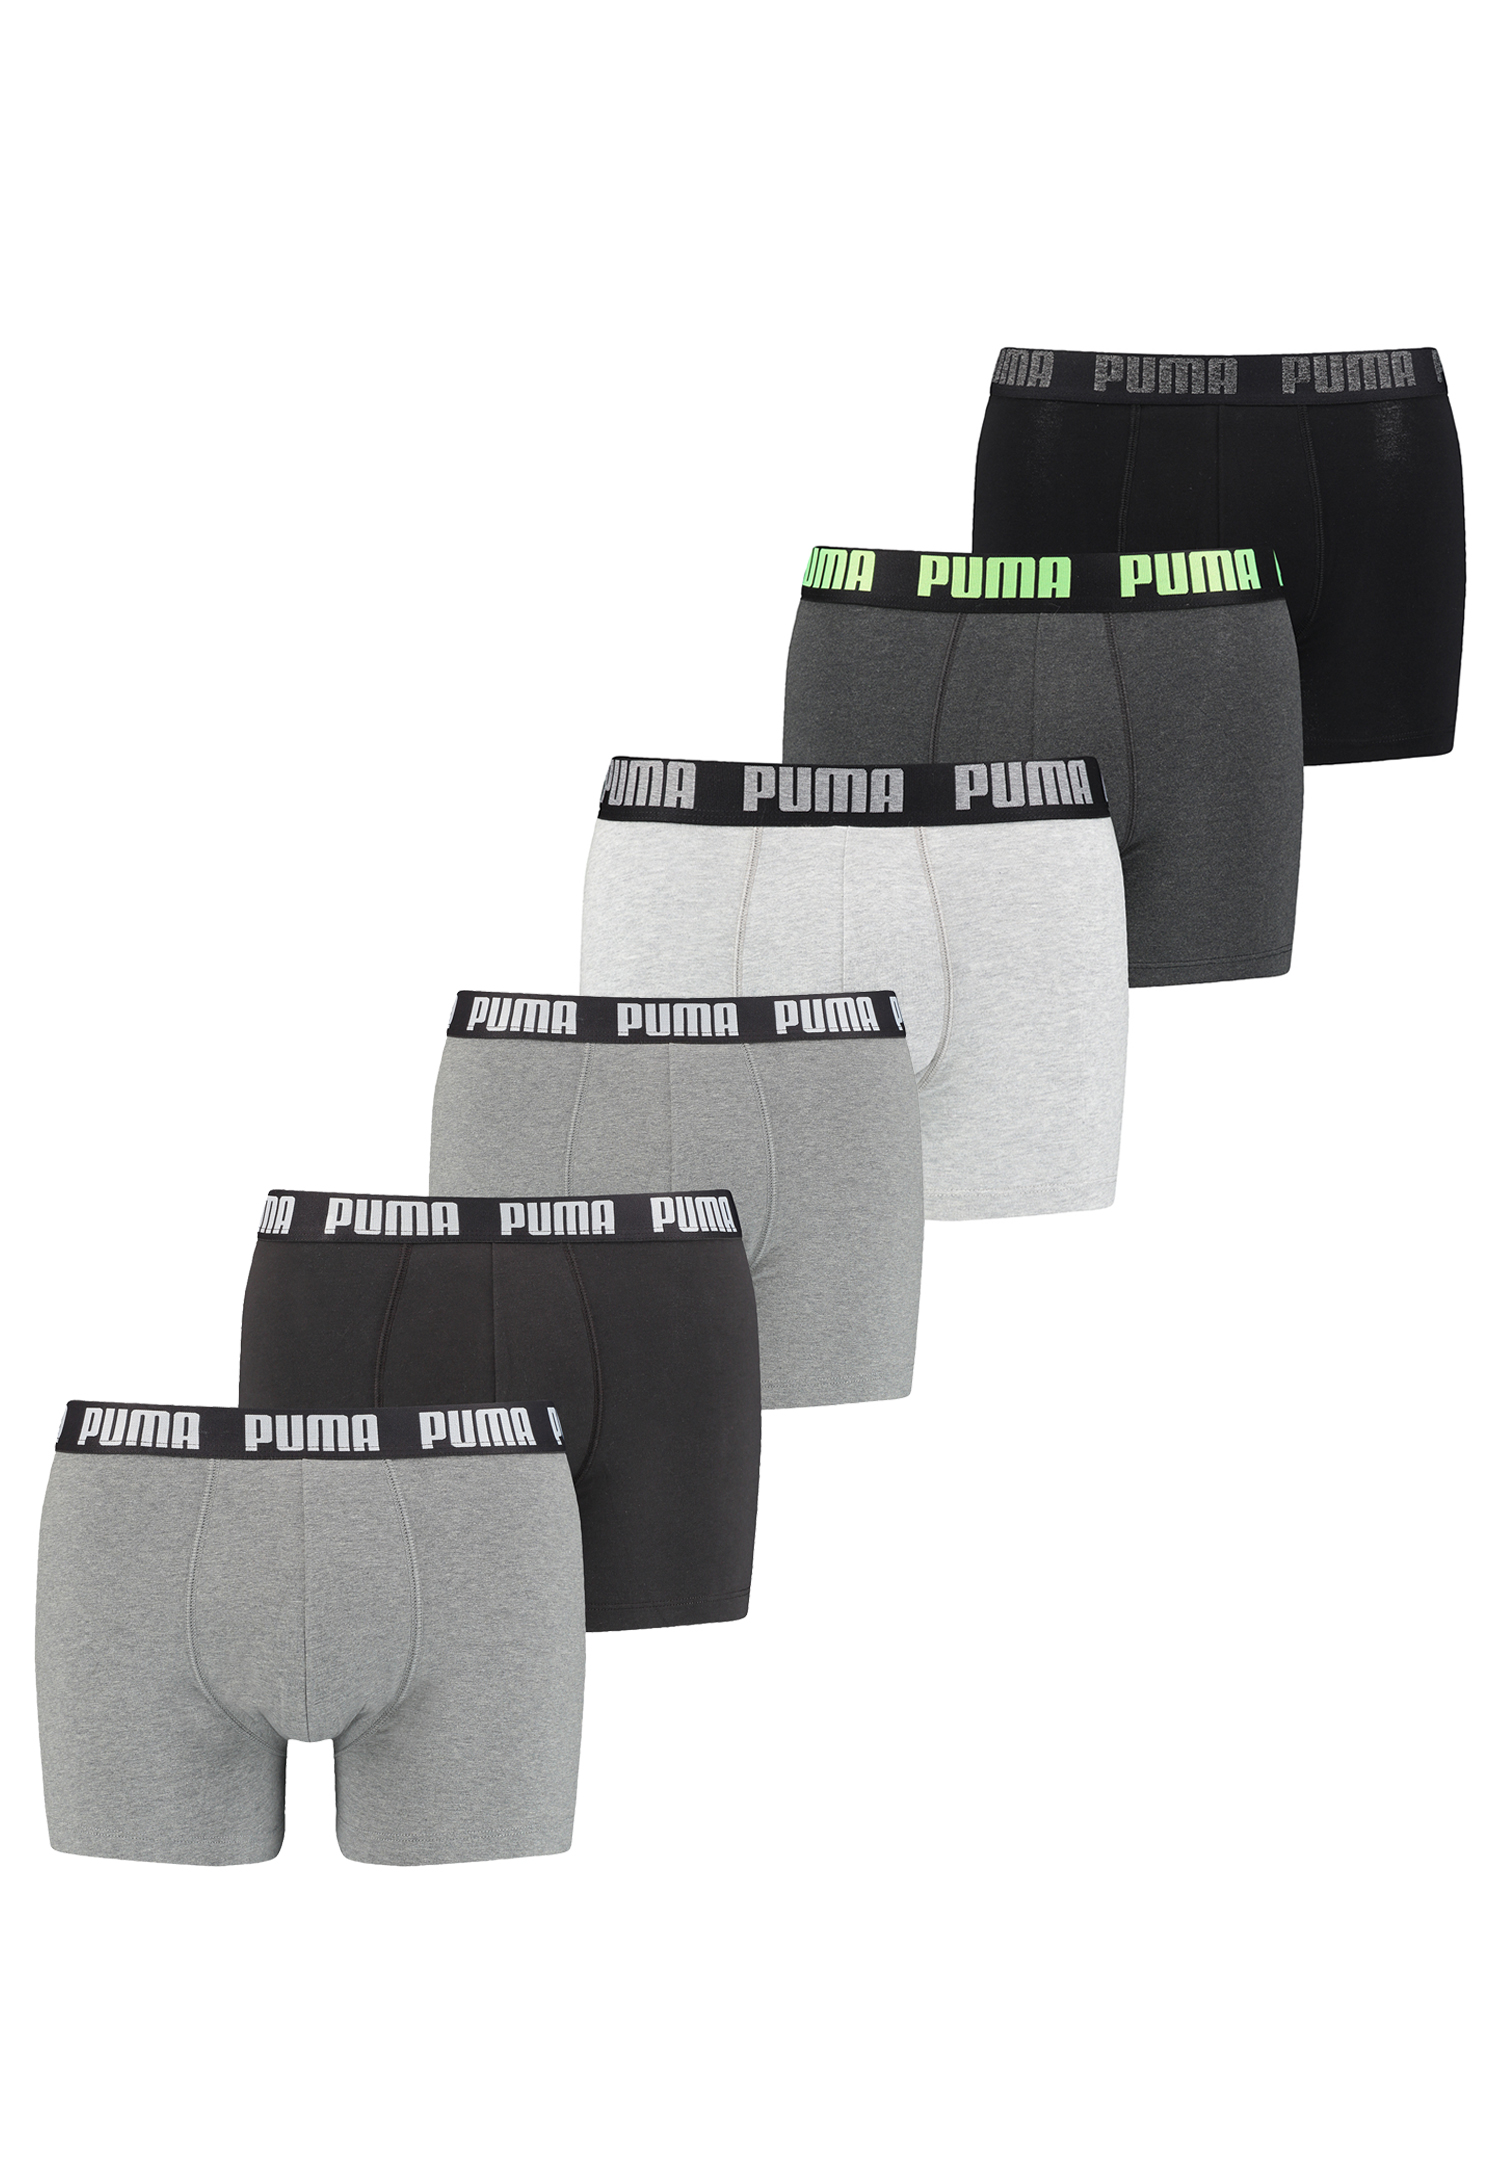 Puma Herren Cat Boxer Shorts Everyday Unterhose Pant Unterwäsche 6 er Pack